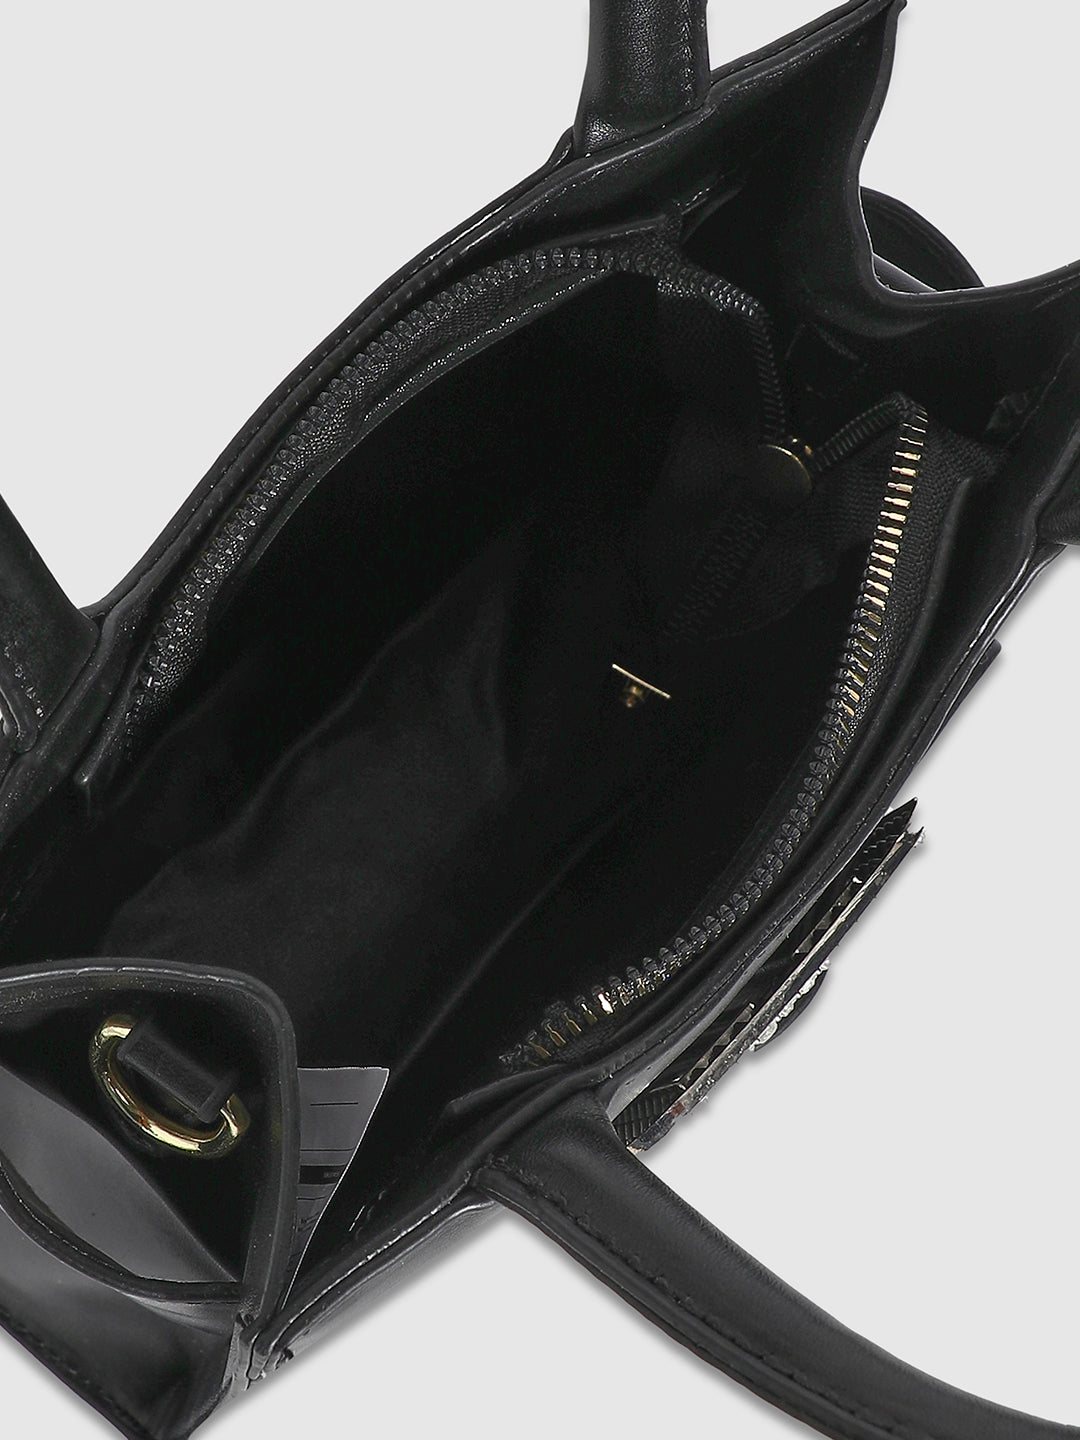 Buckle Mini Handbag - Black